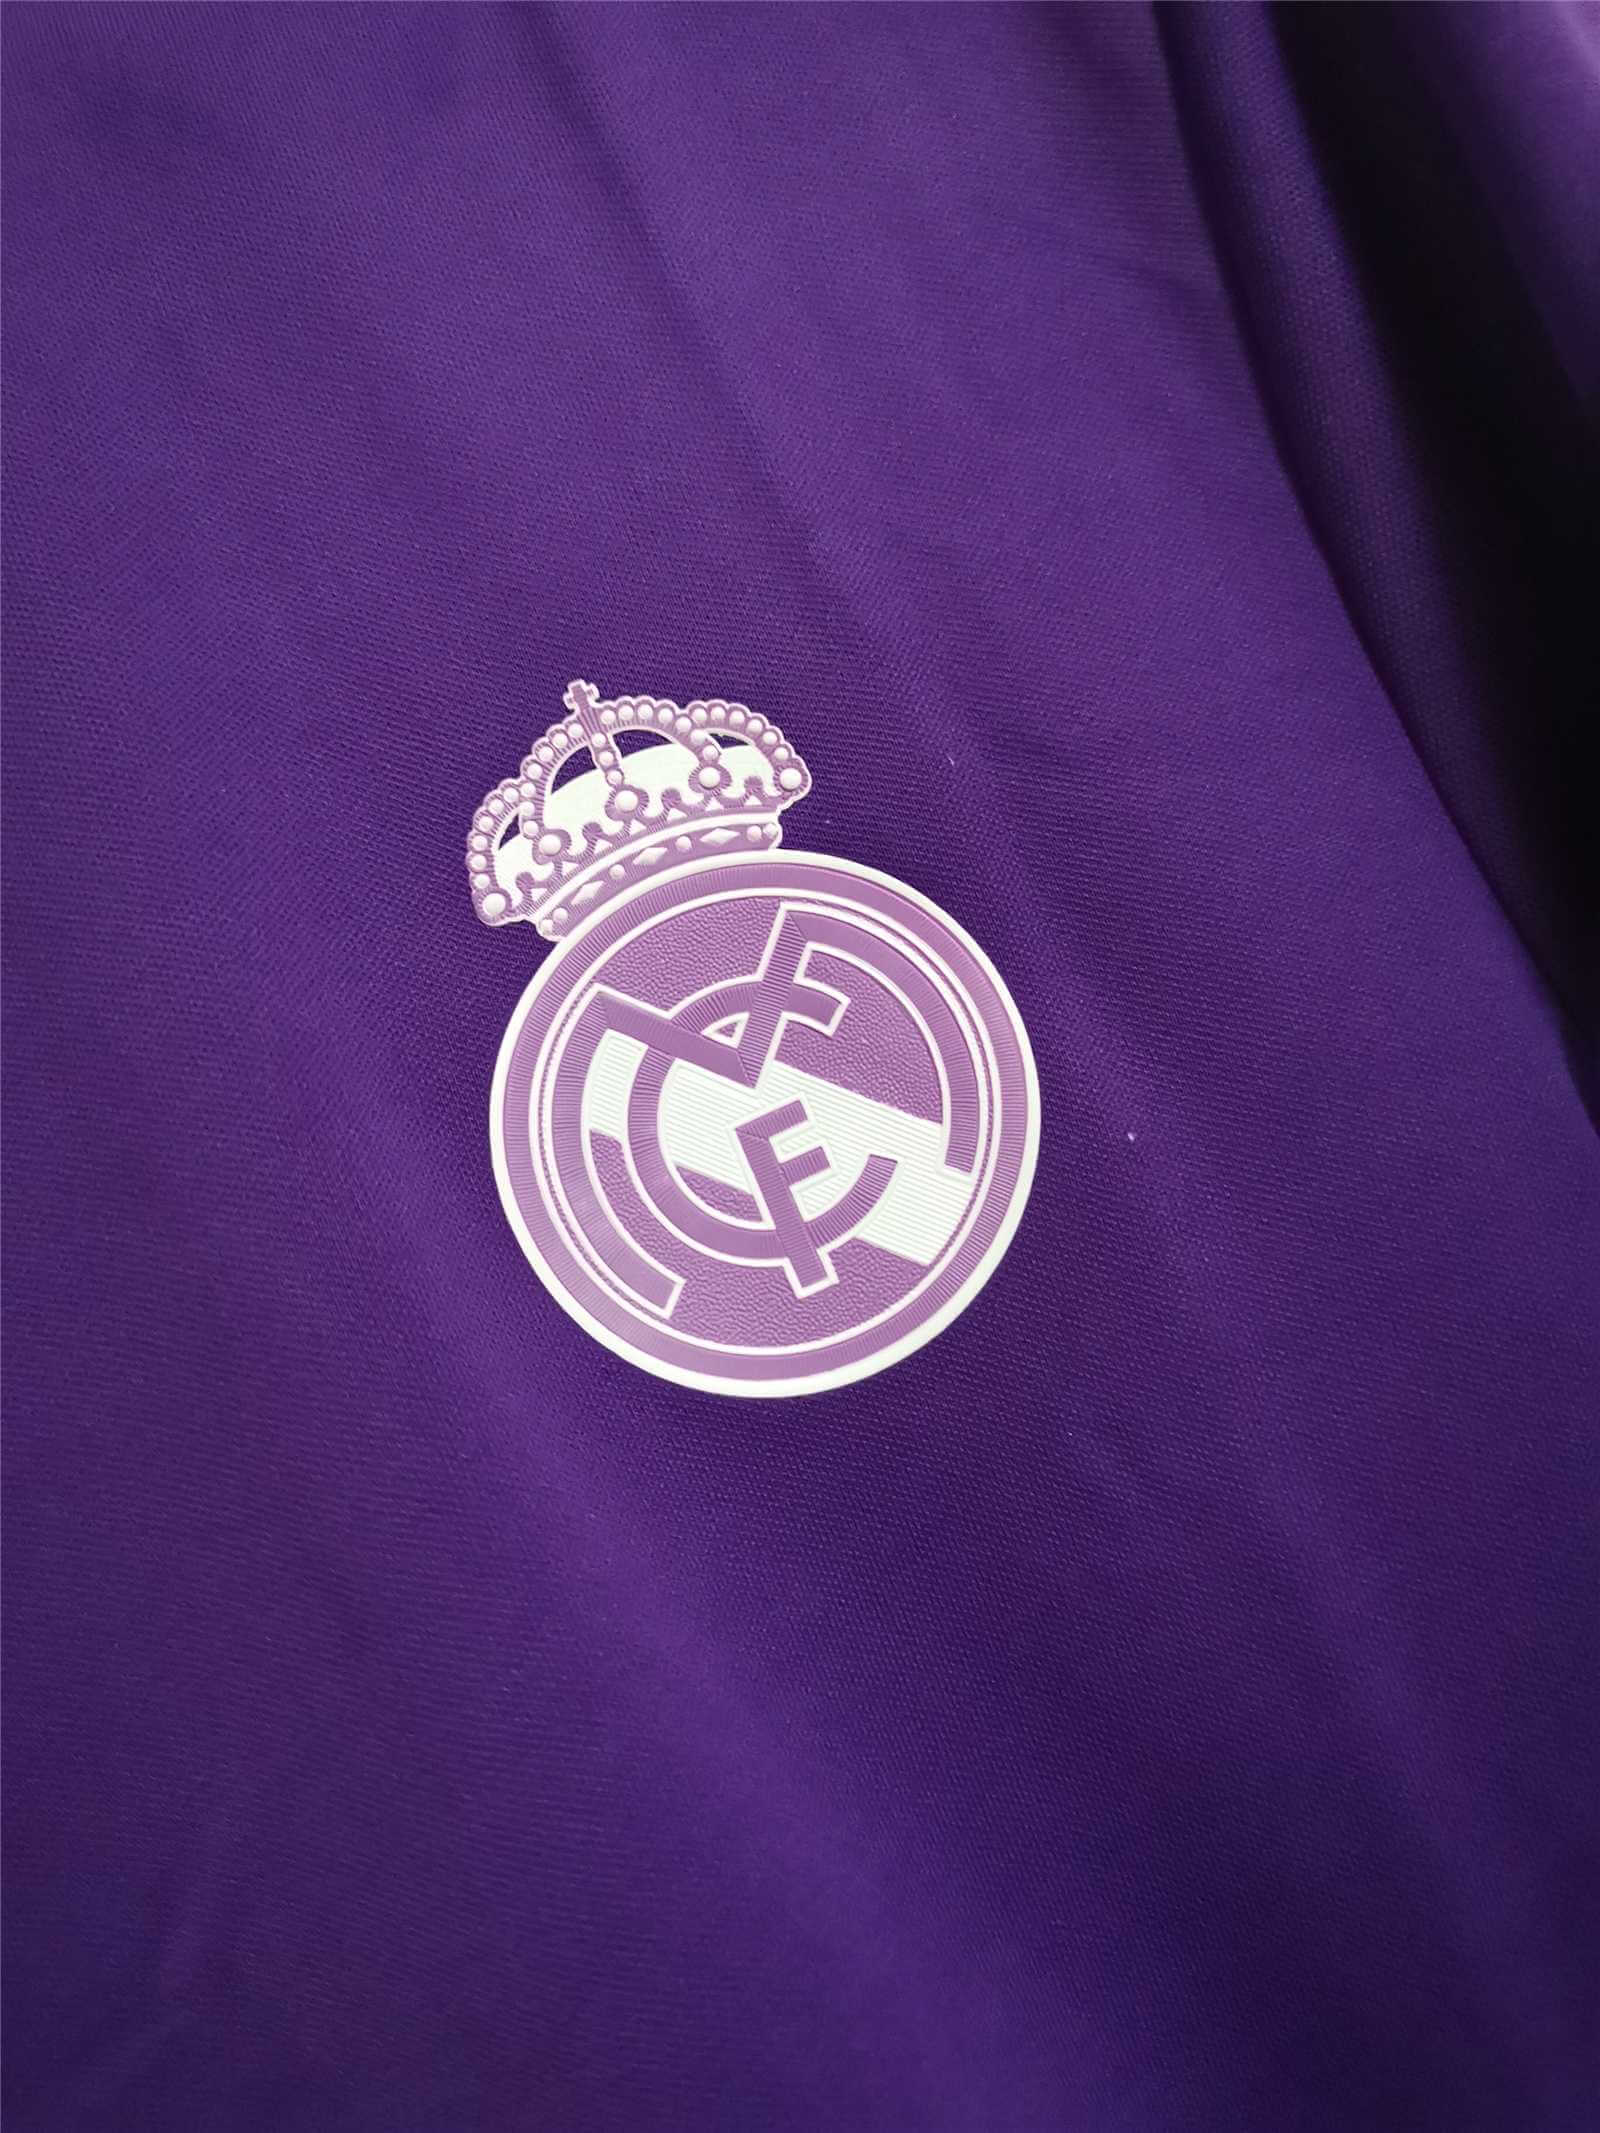 Real Madrid CF Retro 2016-2017